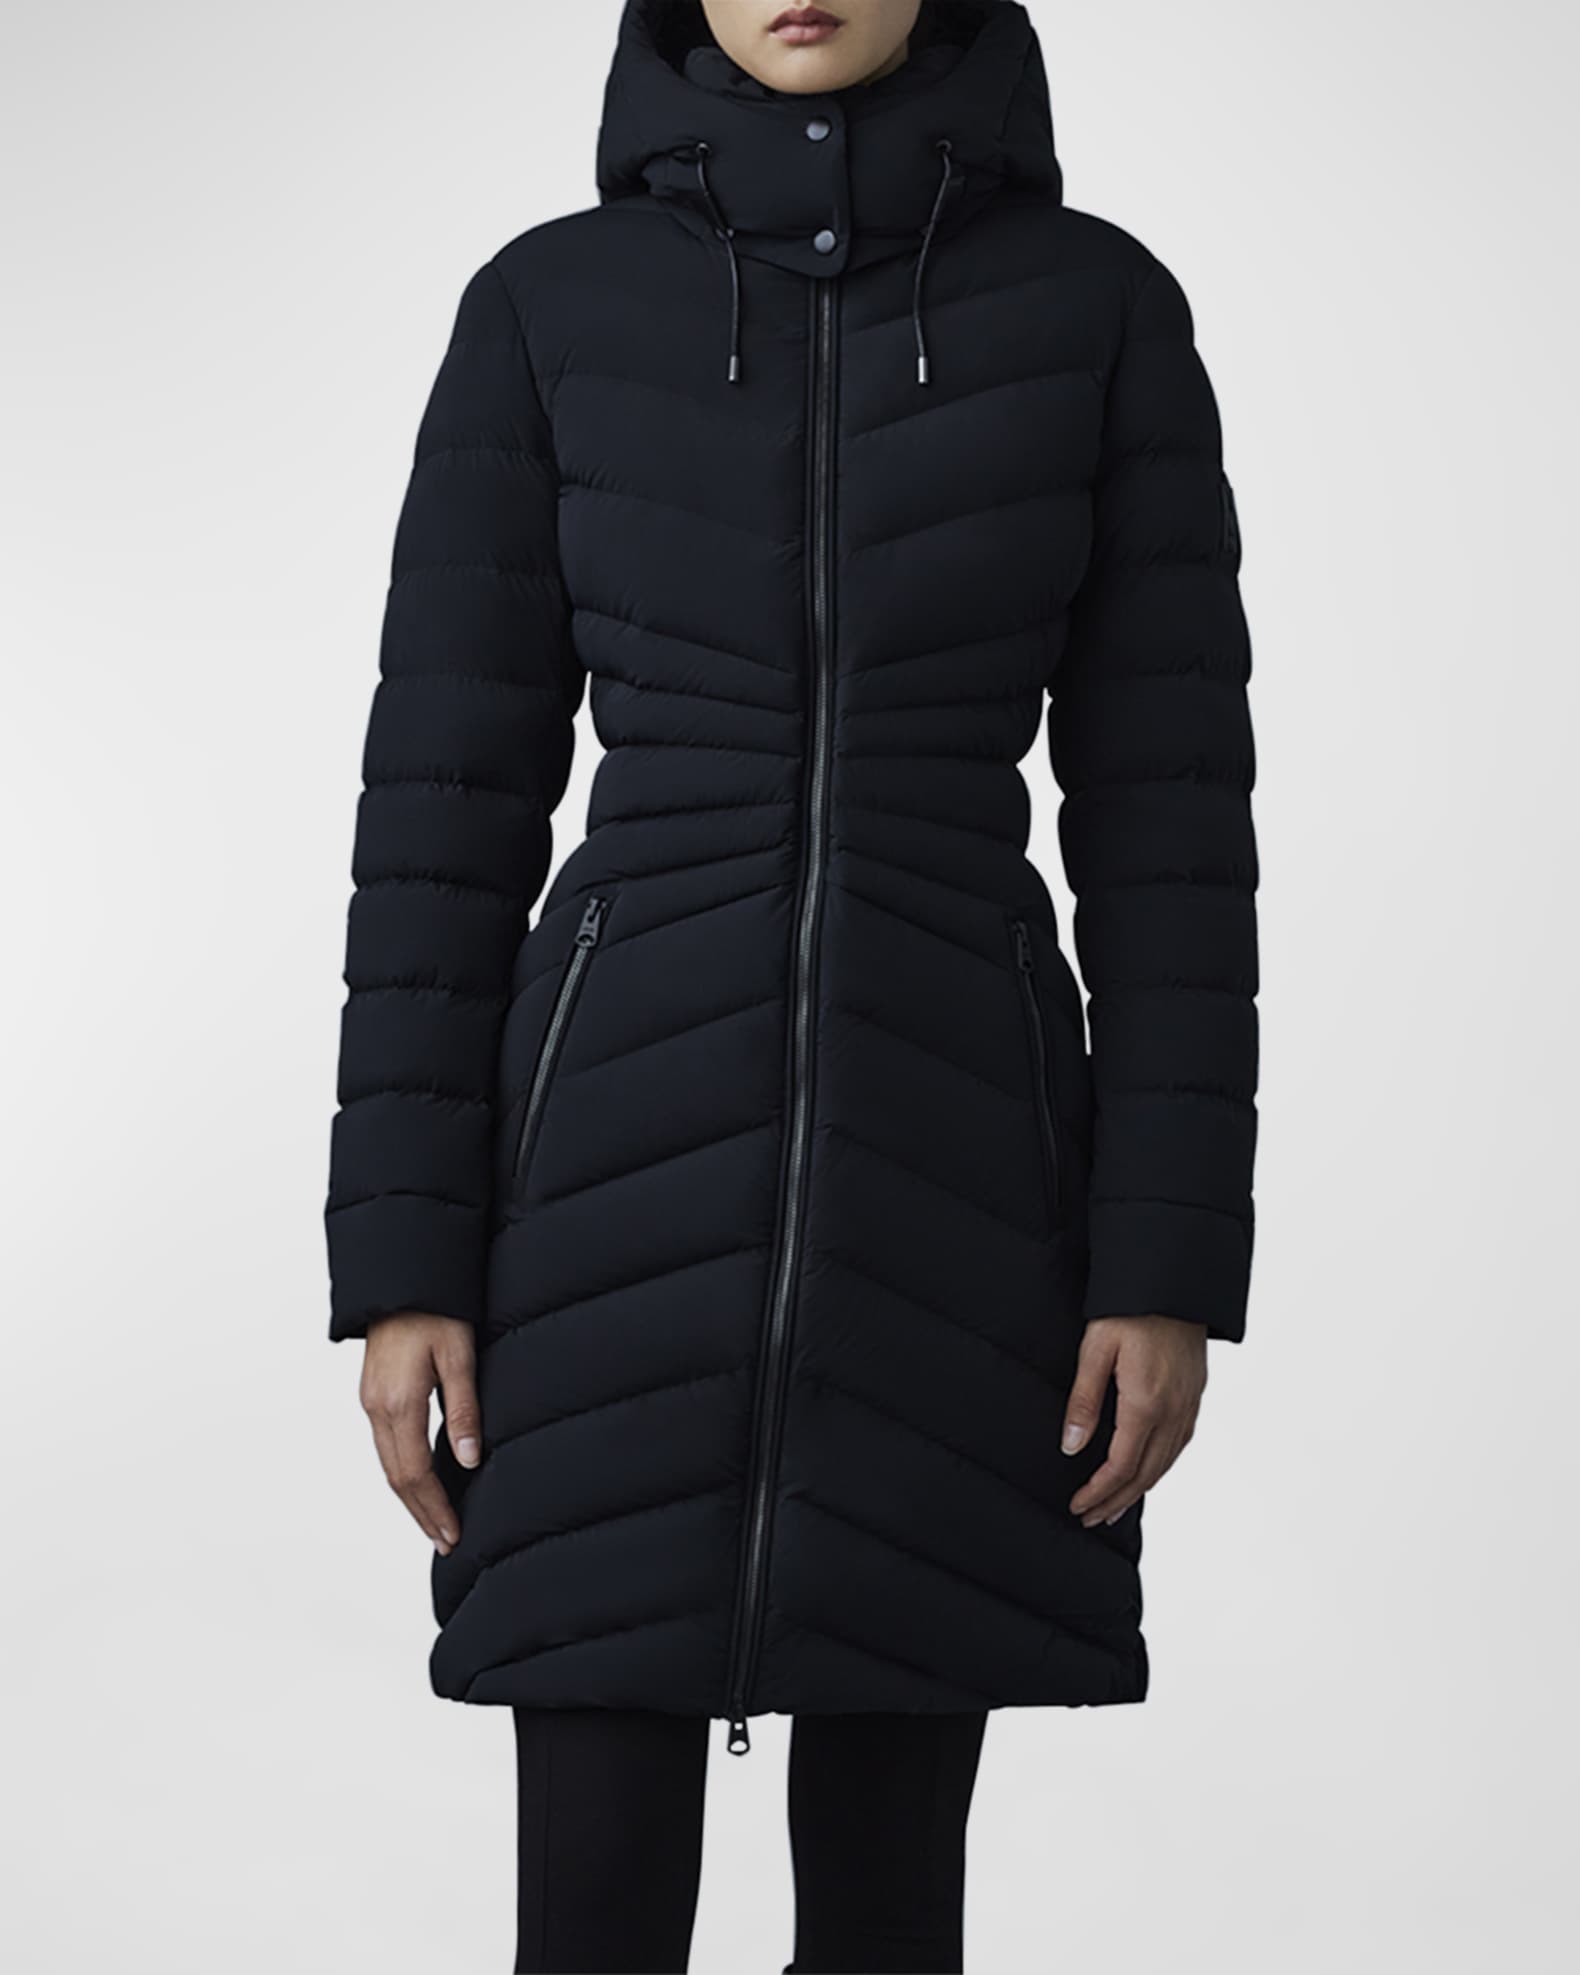 Leather Accent Sleeveless Puffer Jacket - Women - Louis Vuitton